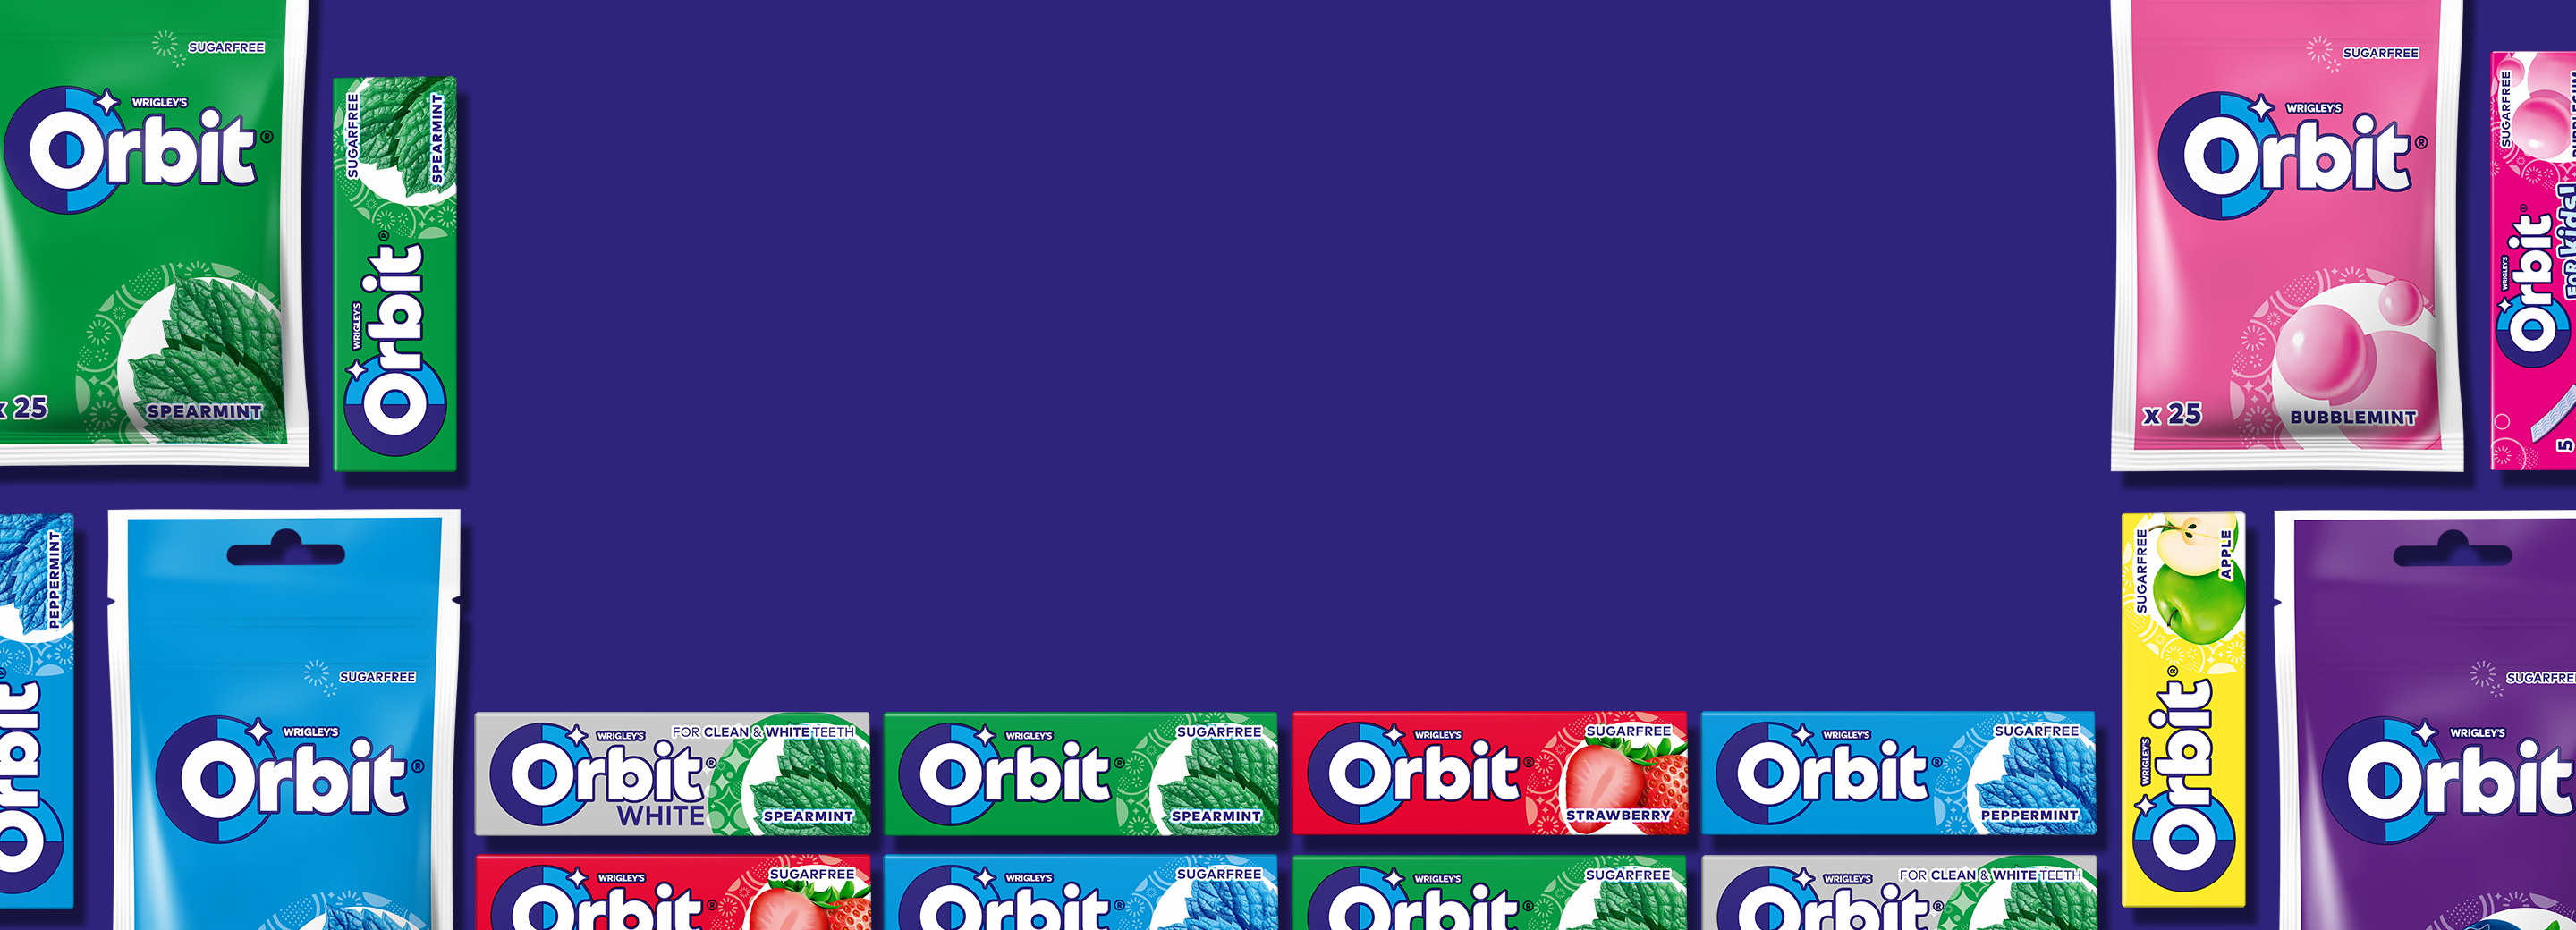 Image Orbit_PL_ZUJ_ORBIT_header